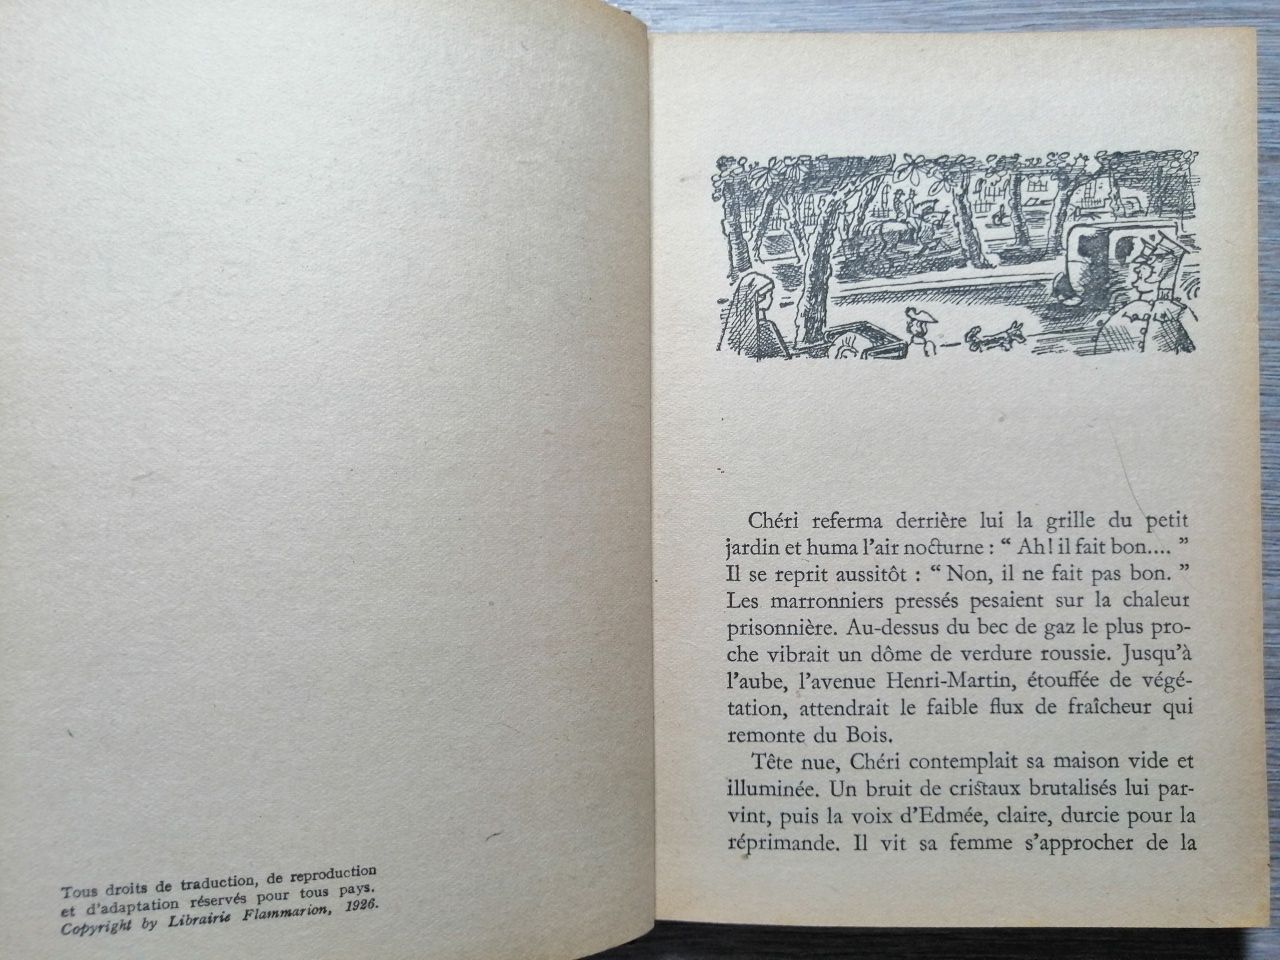 Colette. La fin de Cheri, видання 1926, французькою мовою